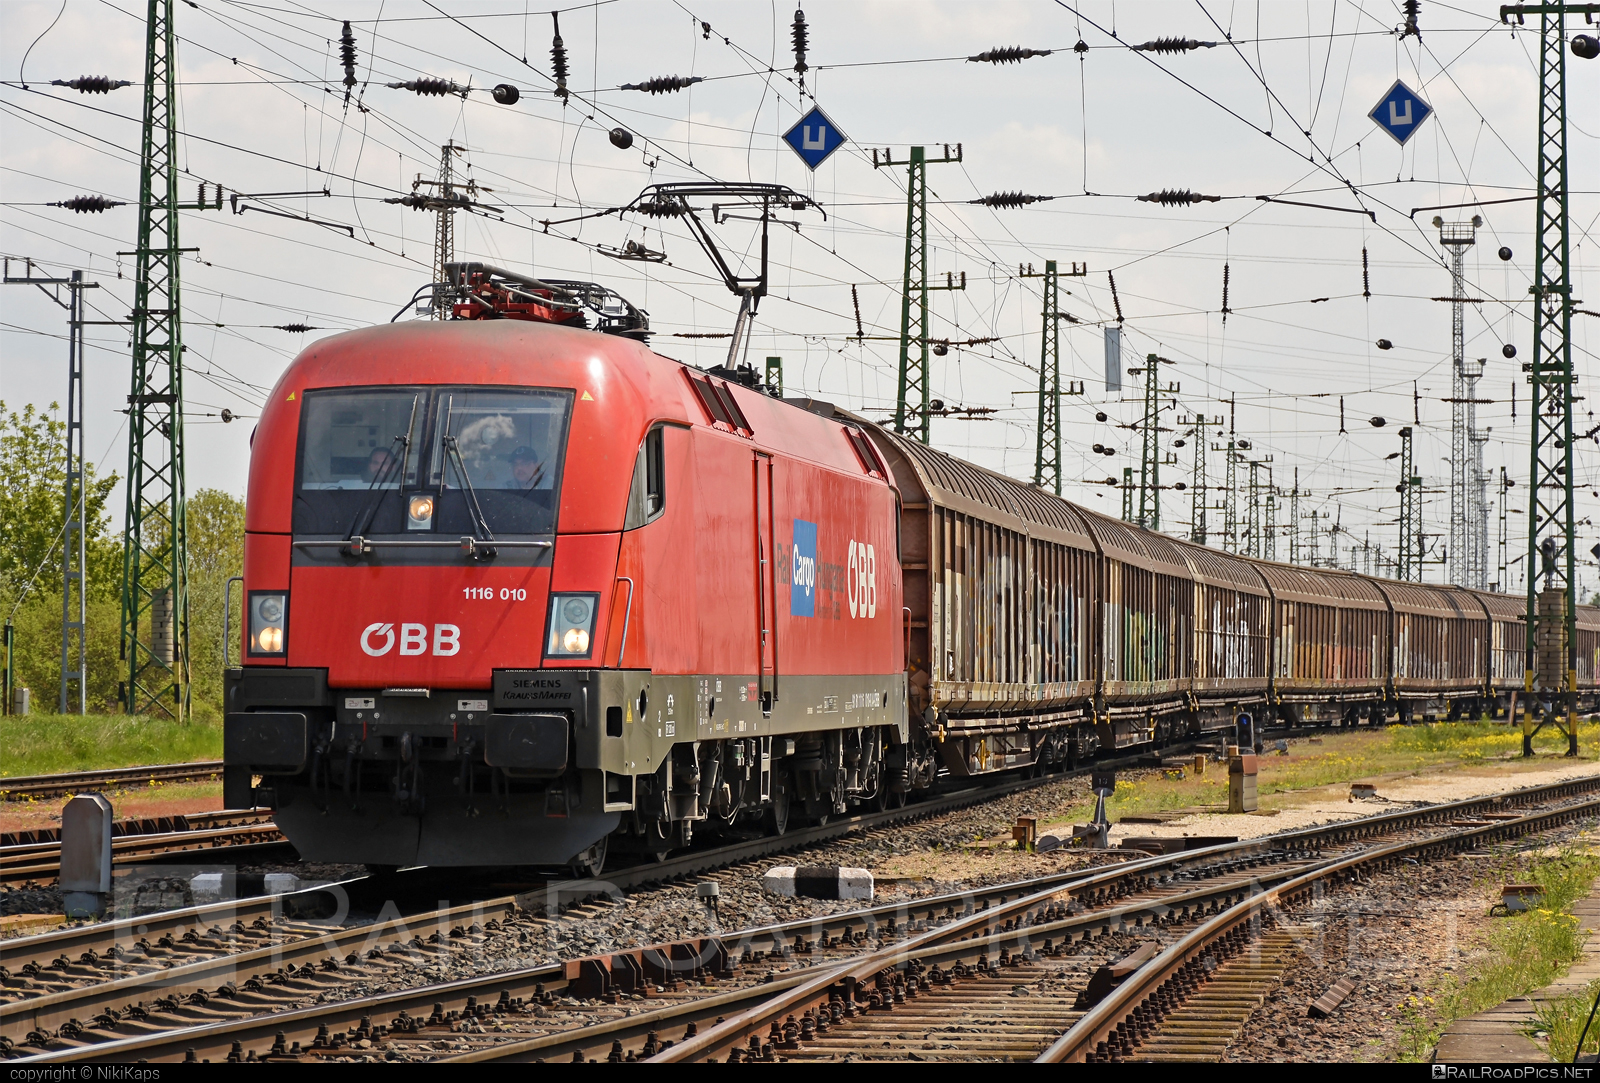 Siemens ES 64 U2 - 1116 010 operated by Rail Cargo Hungaria ZRt. #es64 #es64u2 #eurosprinter #obb #osterreichischebundesbahnen #rch #siemens #siemensEs64 #siemensEs64u2 #siemenstaurus #taurus #tauruslocomotive